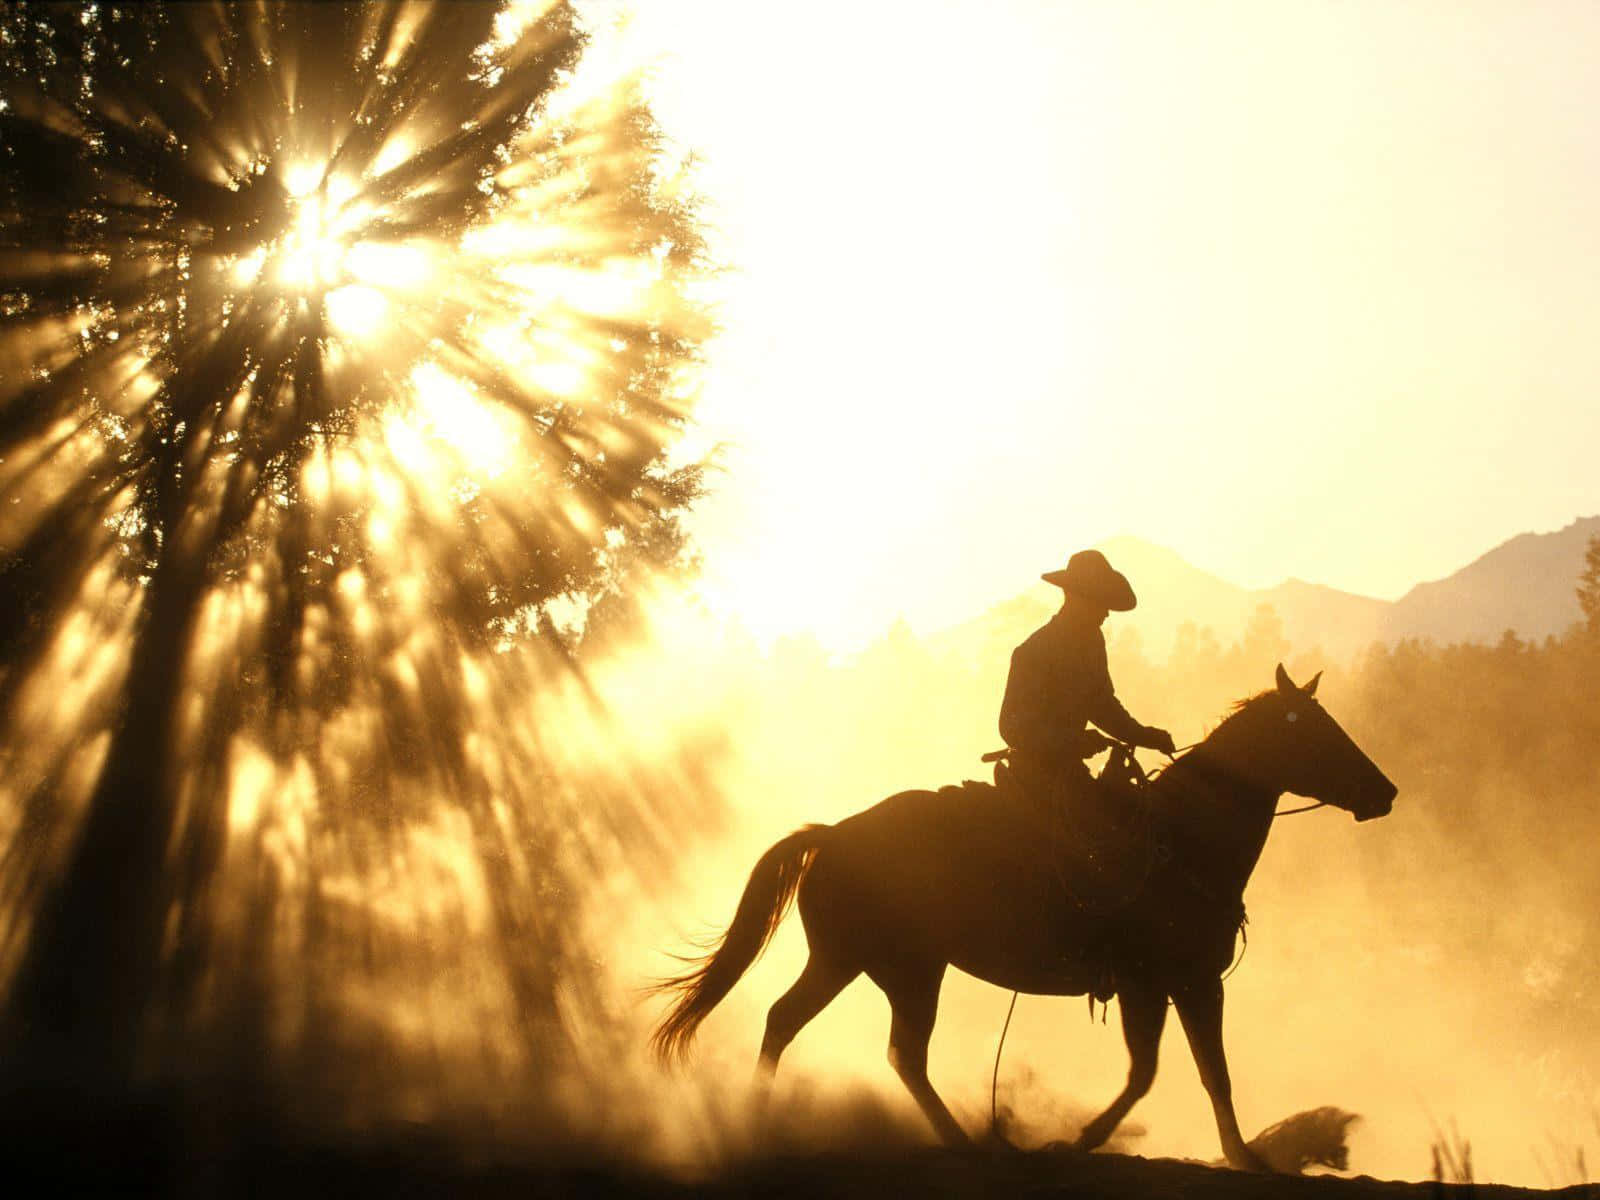 "A Cowboy at Sunrise"